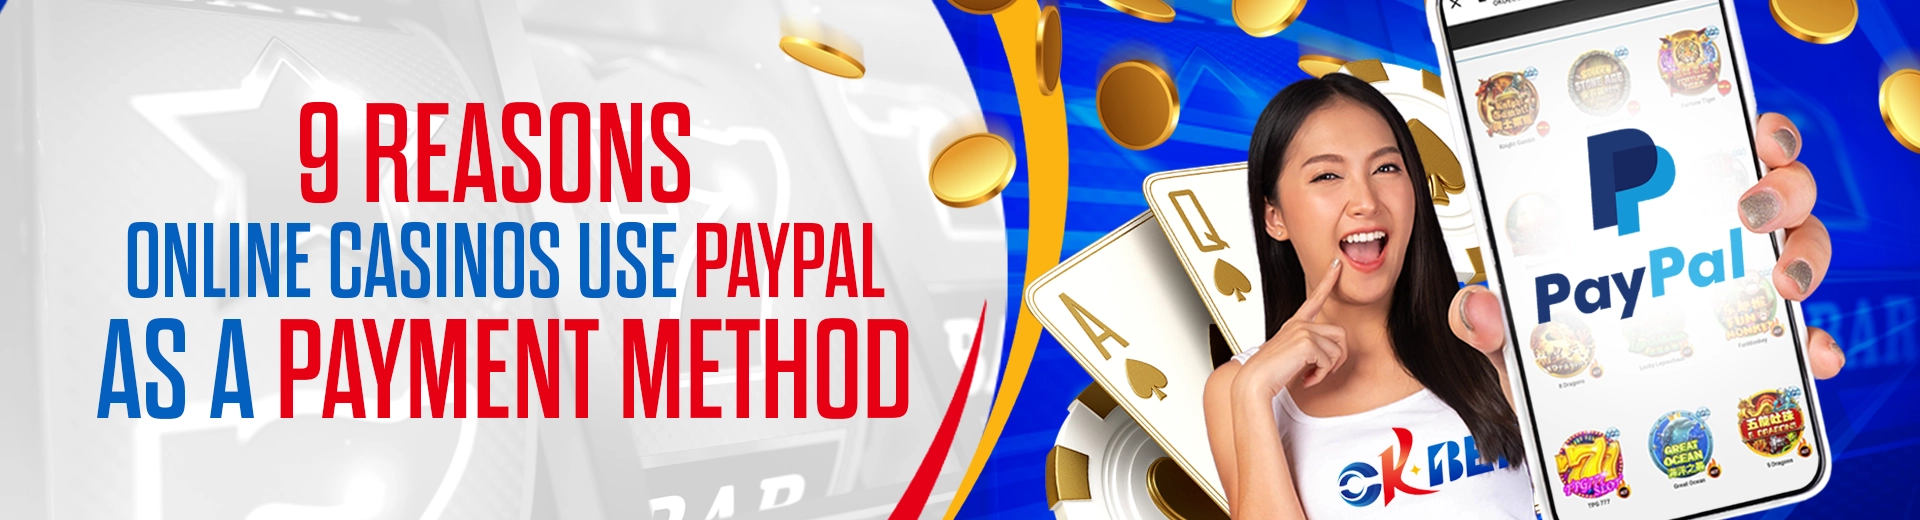 OKBet Online Casino PayPal